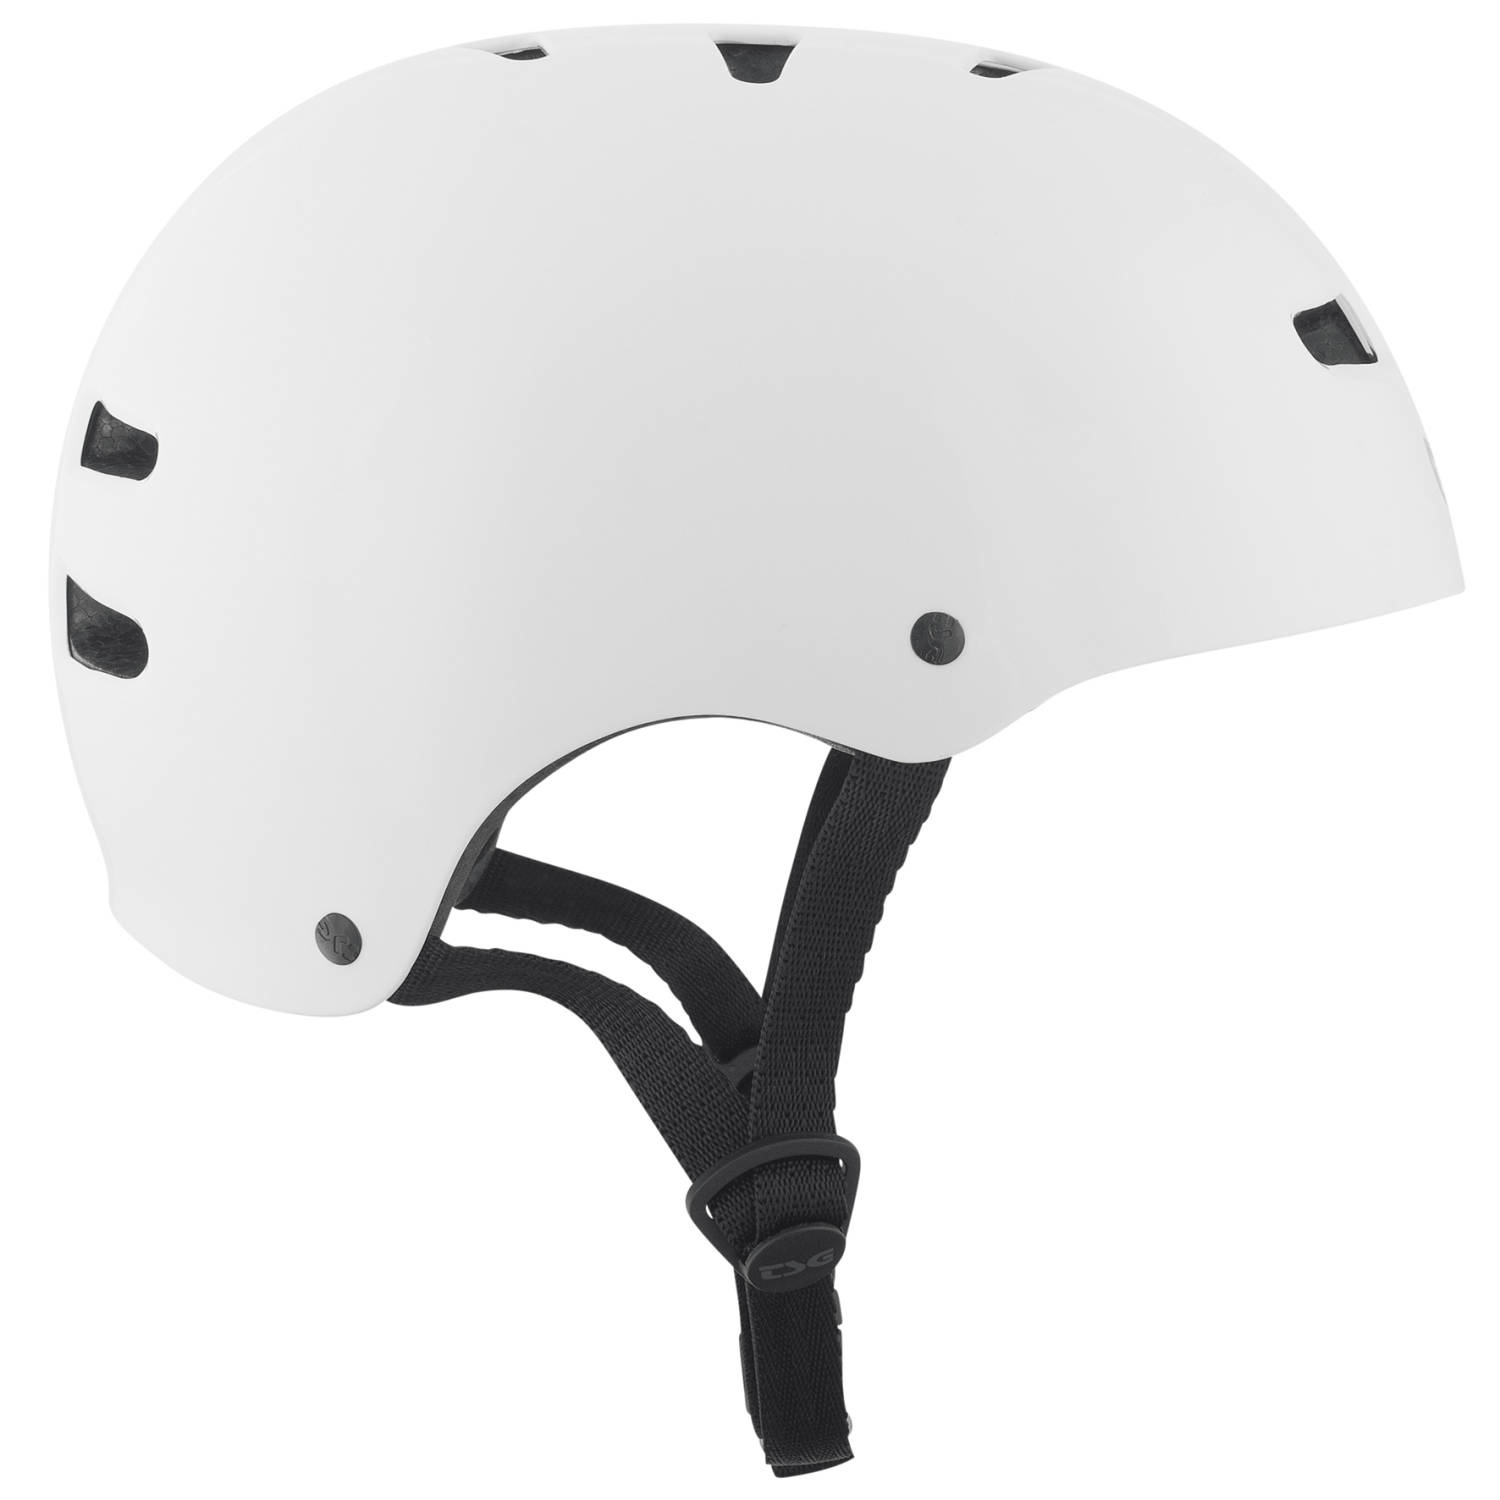 Ten einde raad mengsel Kan worden berekend TSG Skate/BMX Helm Solid Color - Stuntstepcenter.nl